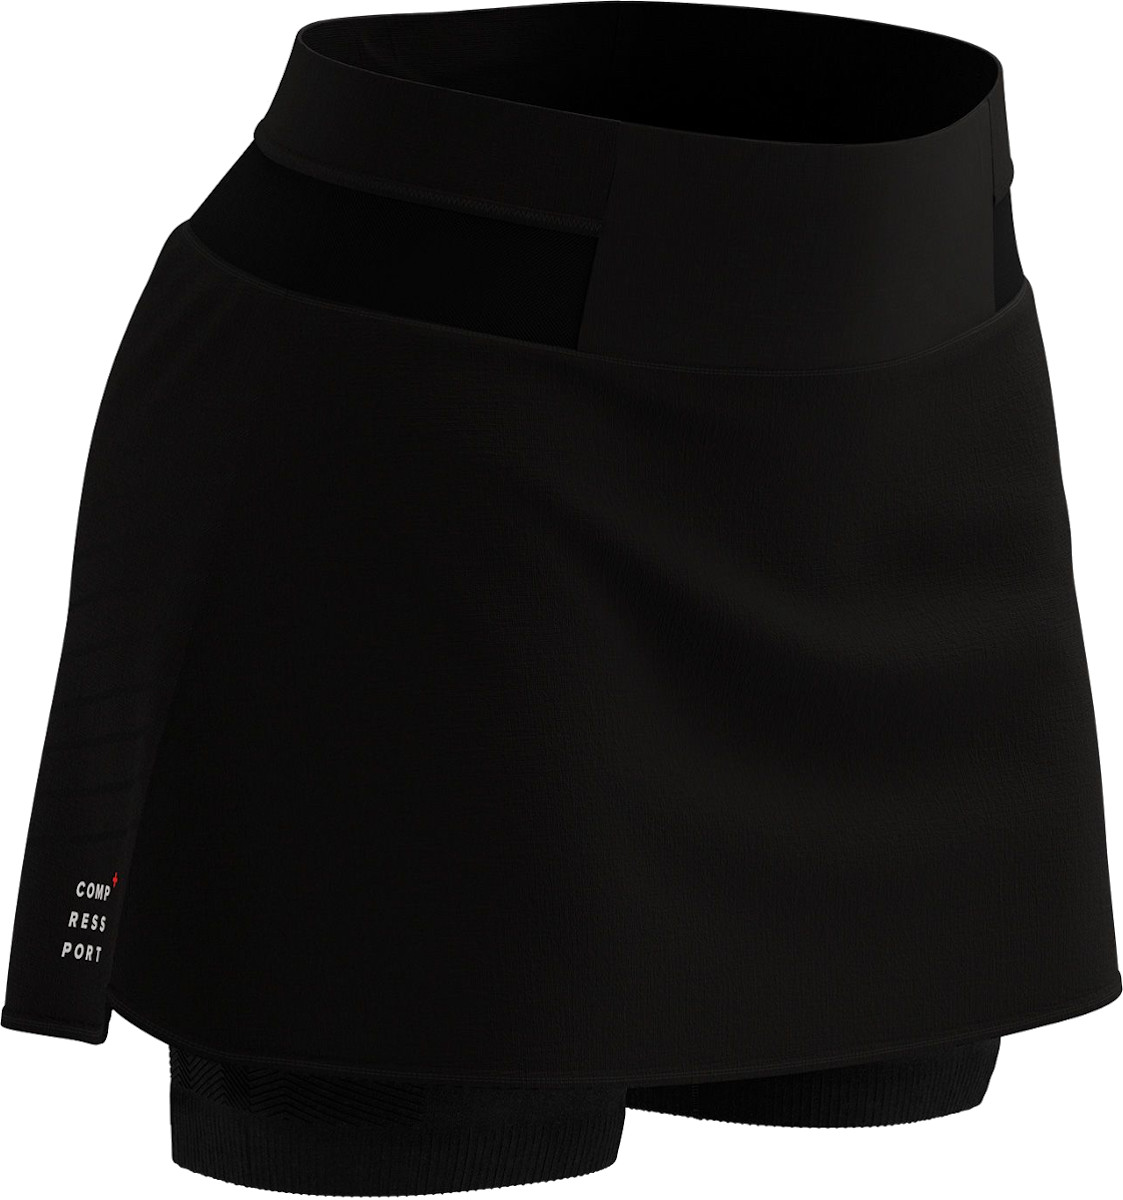 Jupe Compressport Performance Skirt W